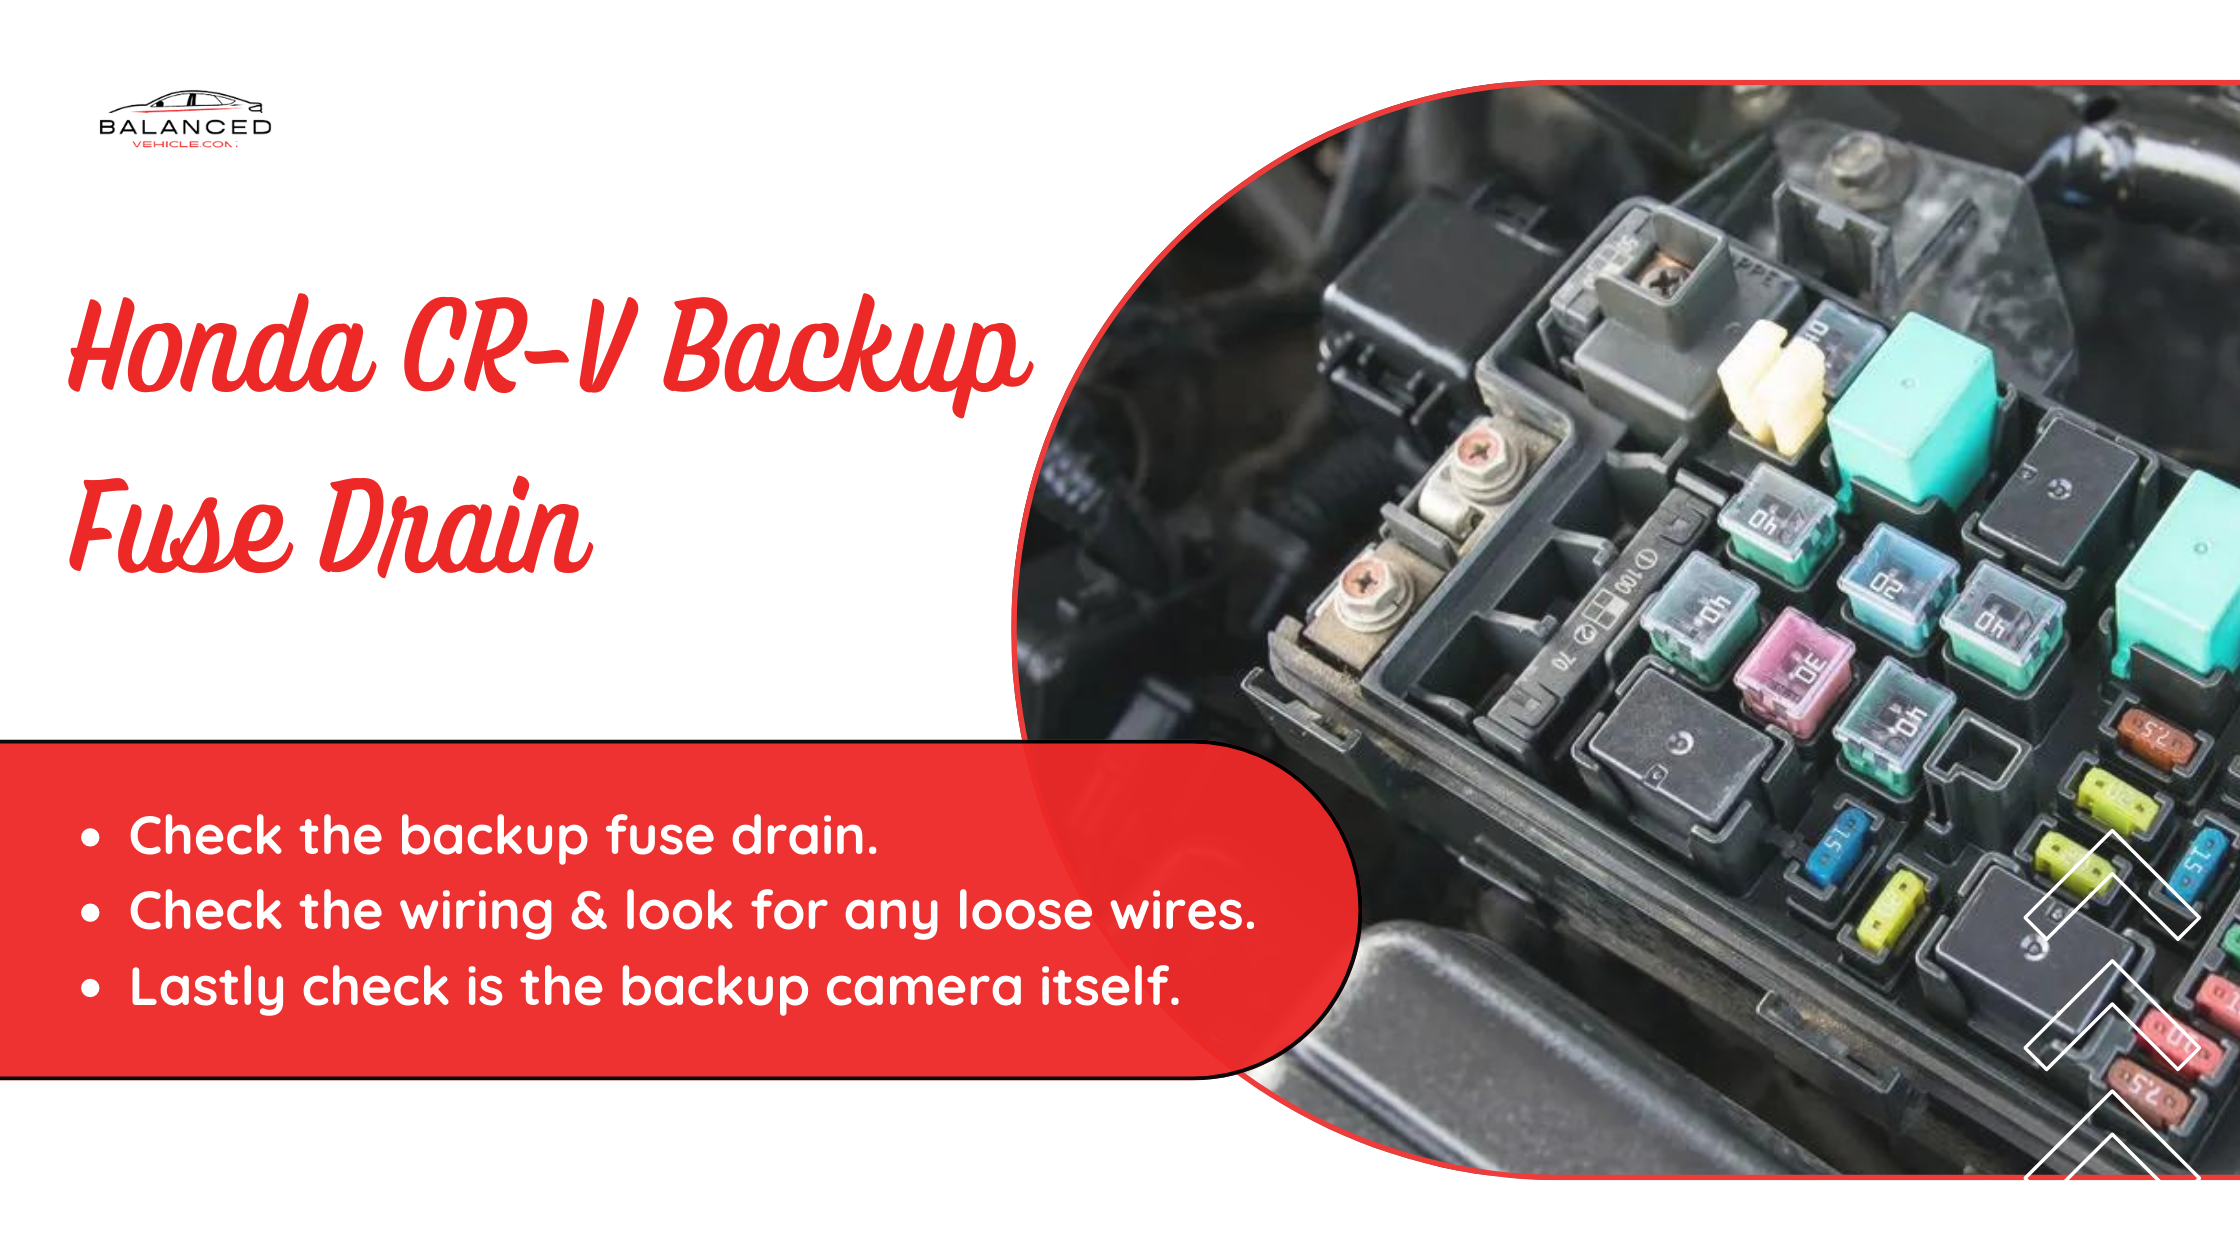 Details of Honda CR-V Backup Fuse Drain